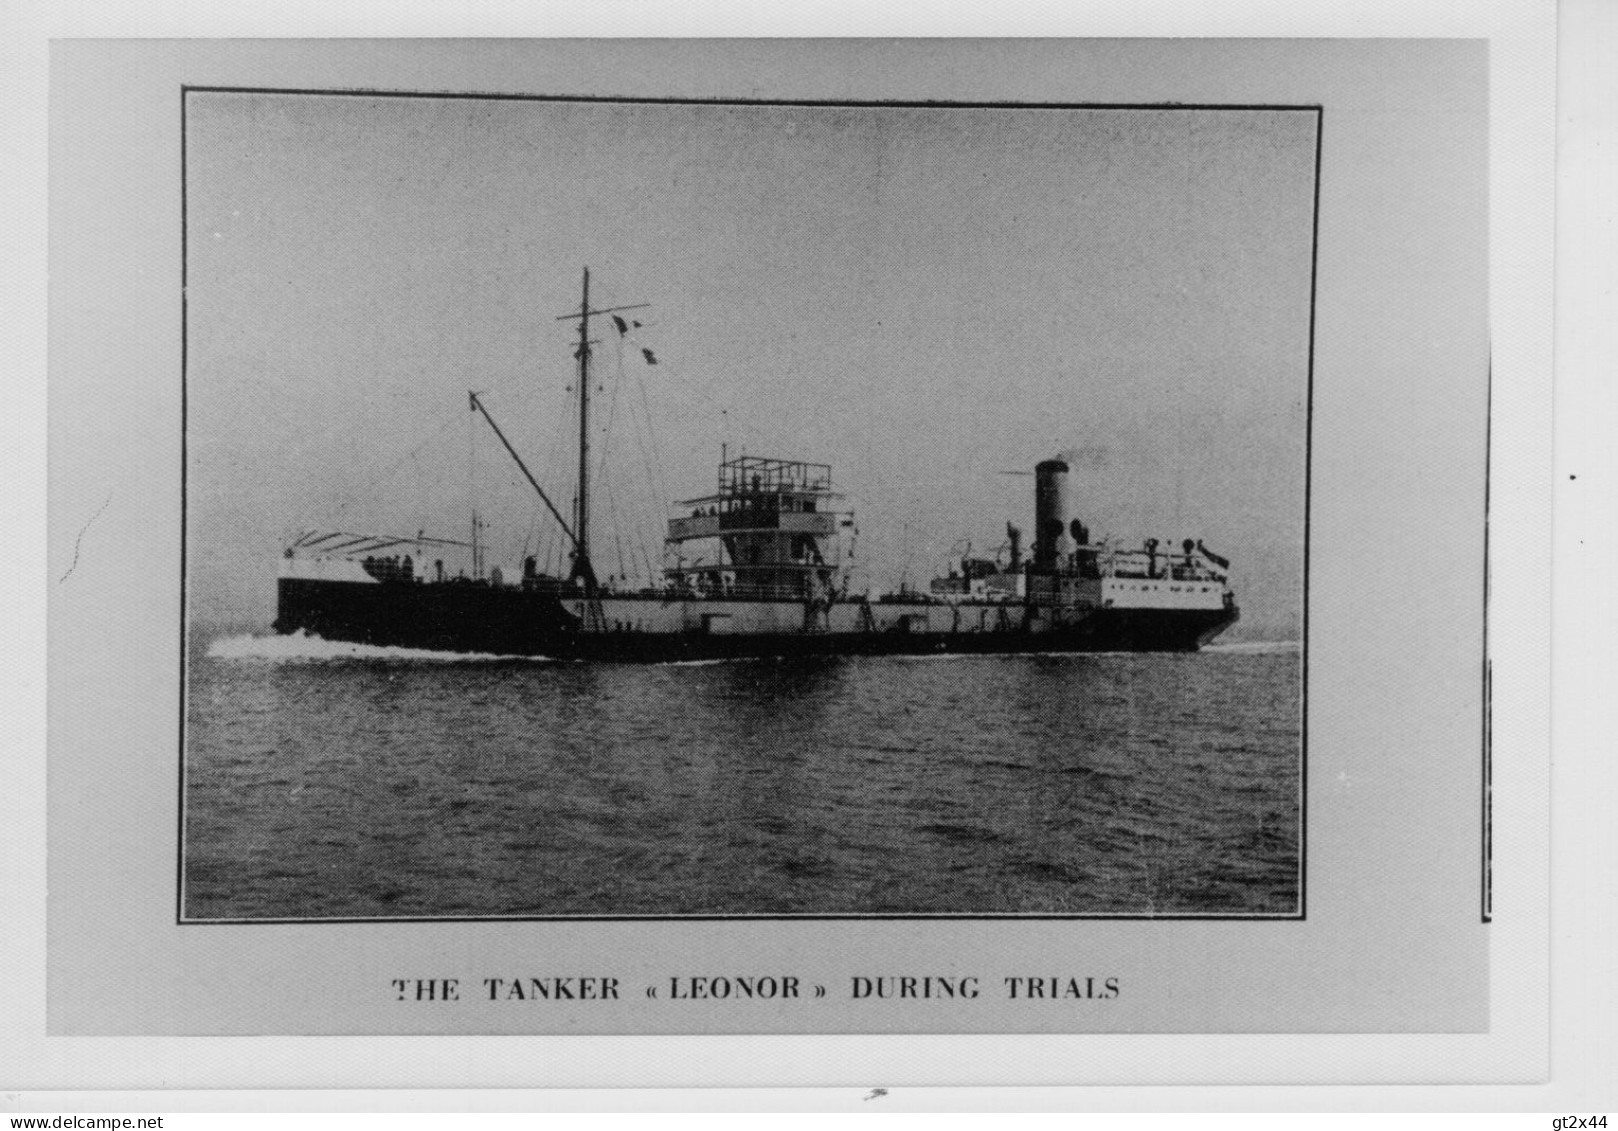 LEONOR During Trials  11/1928 ===SPRAMEX  ---repro--- - Tanker